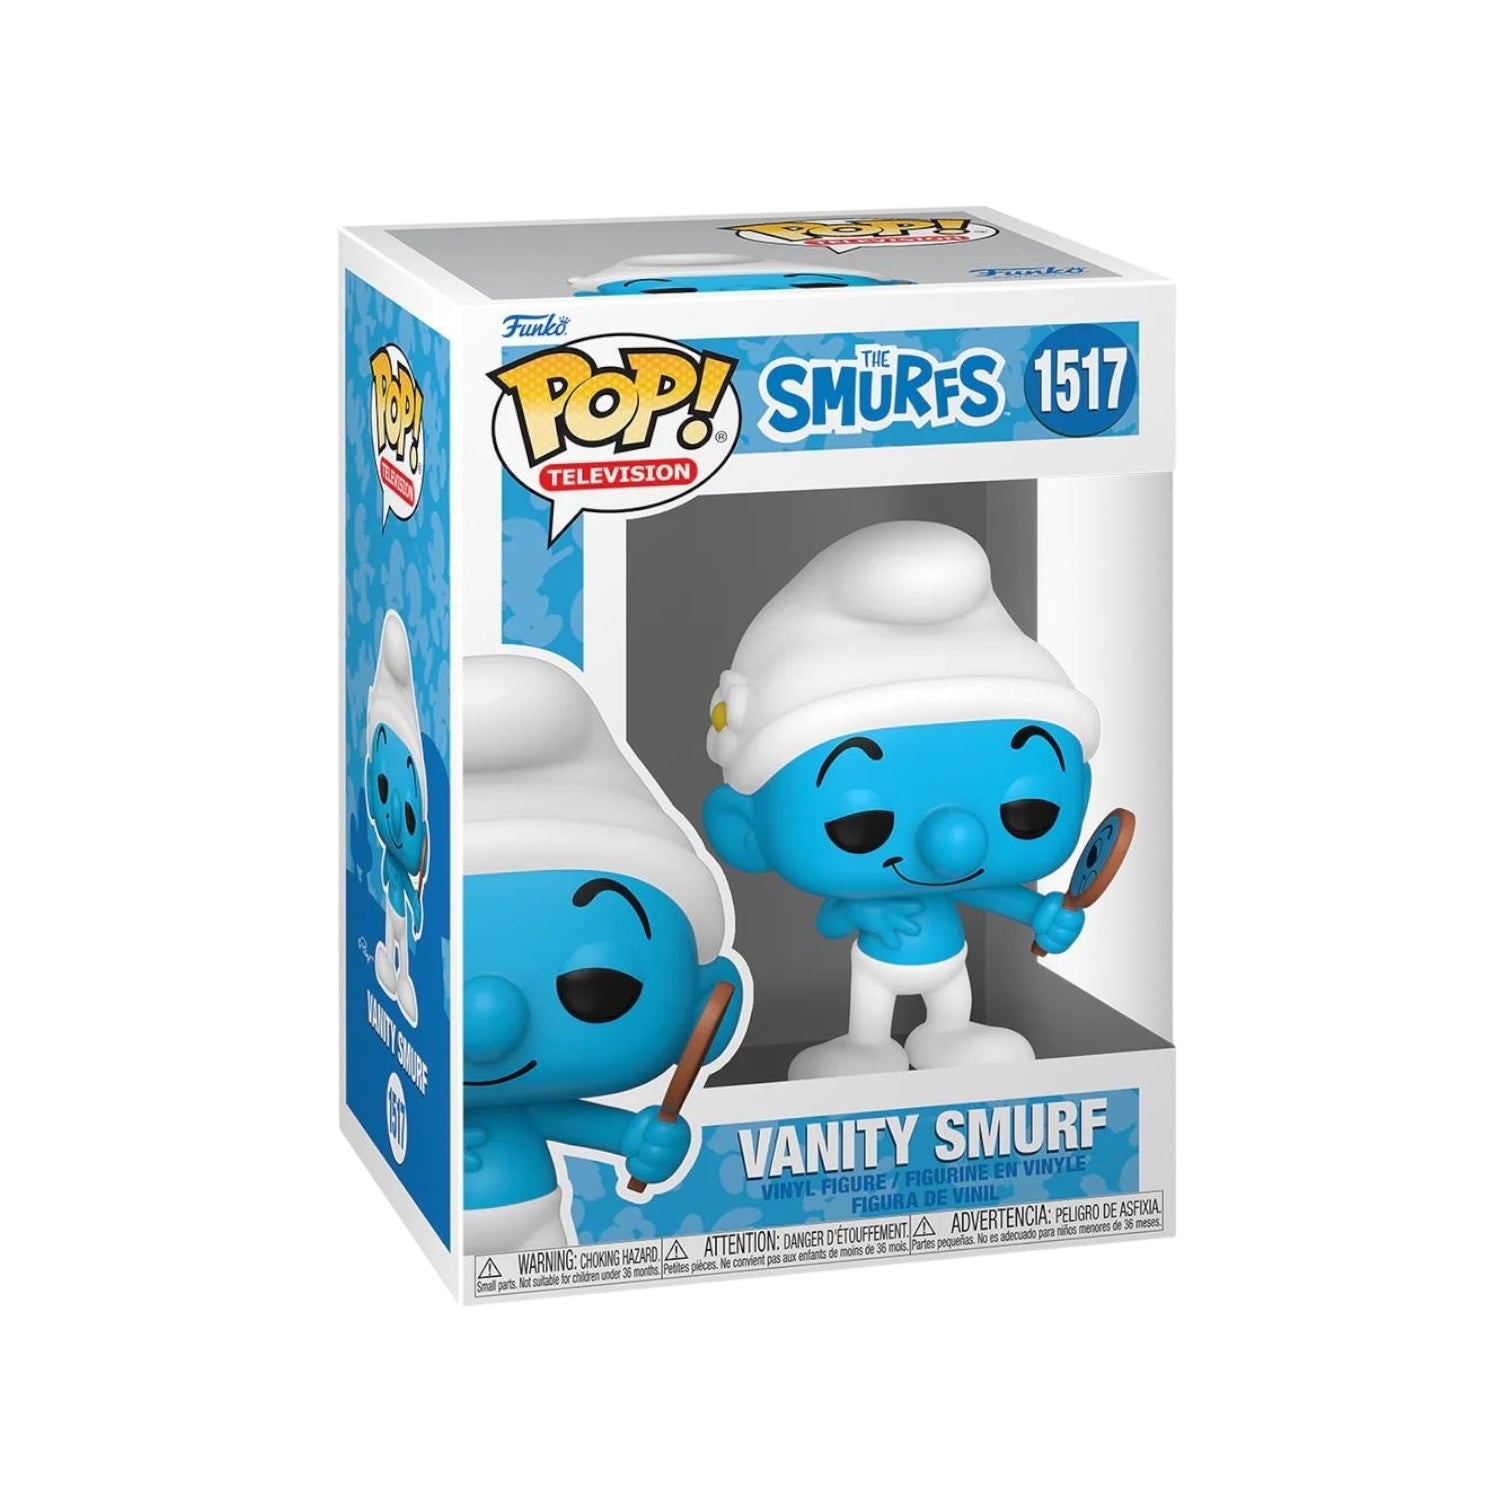 Vanity Smurf #1517 Funko Pop!  - The Smurfs